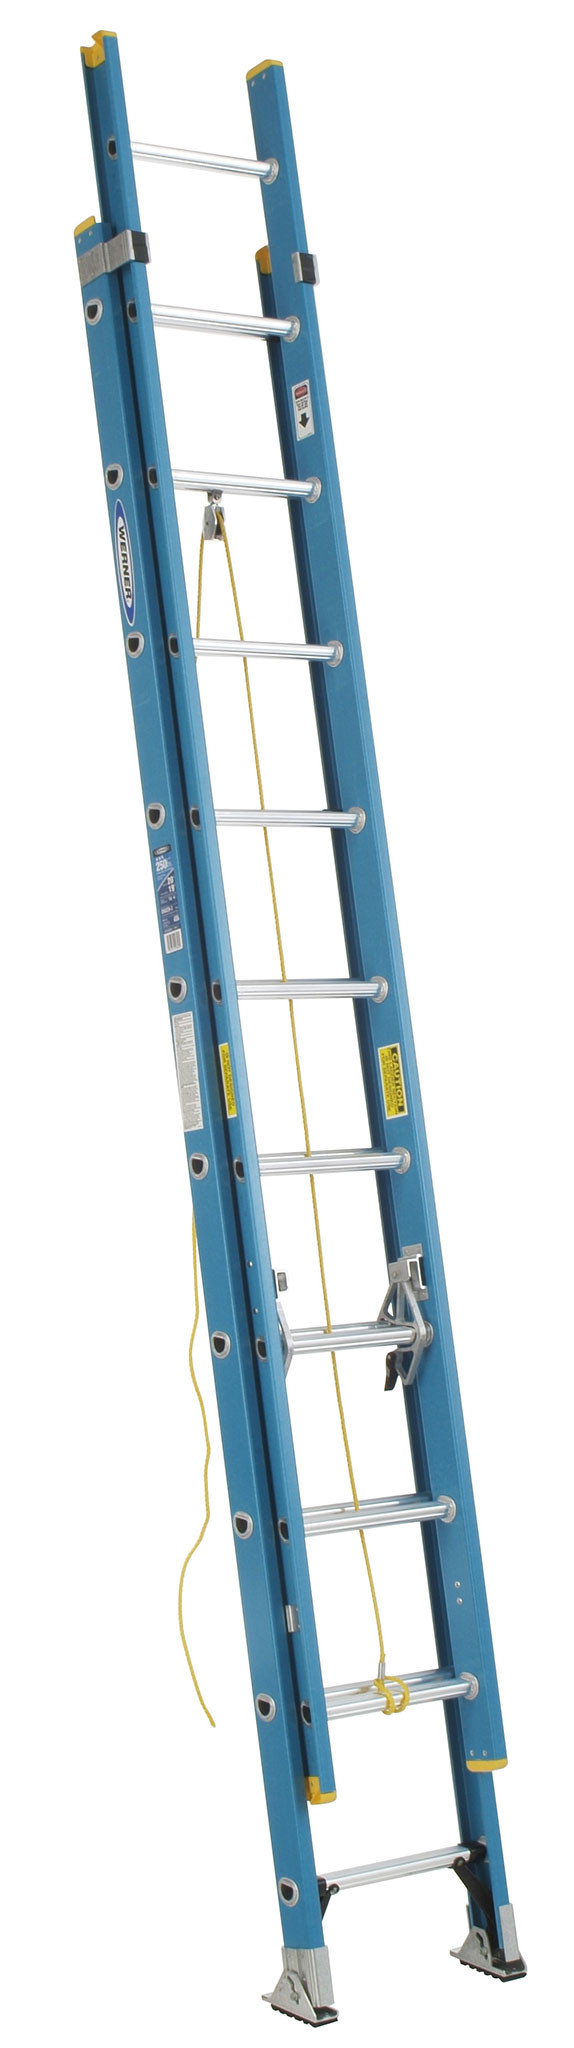 D6020-2 | Extension Ladders | Werner US